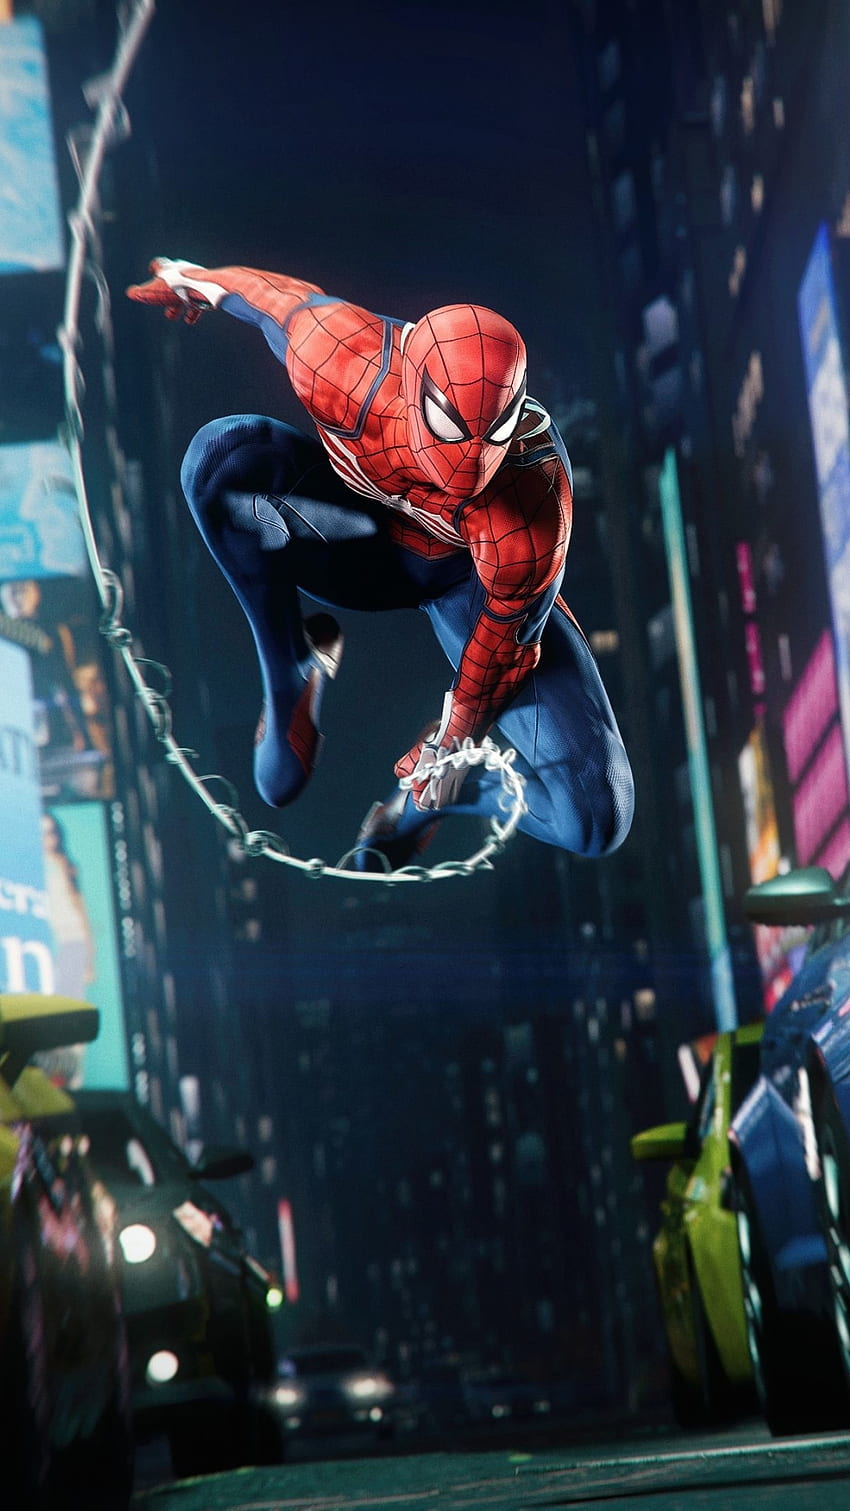 Marvel's Spider Man Remastered IPhone 7, 6s, 6 Plus Dan Pixel XL , One Plus 3, 3t, 5 , Game , , Dan Sarang Latar Belakang, Spider Man Mobile wallpaper ponsel HD